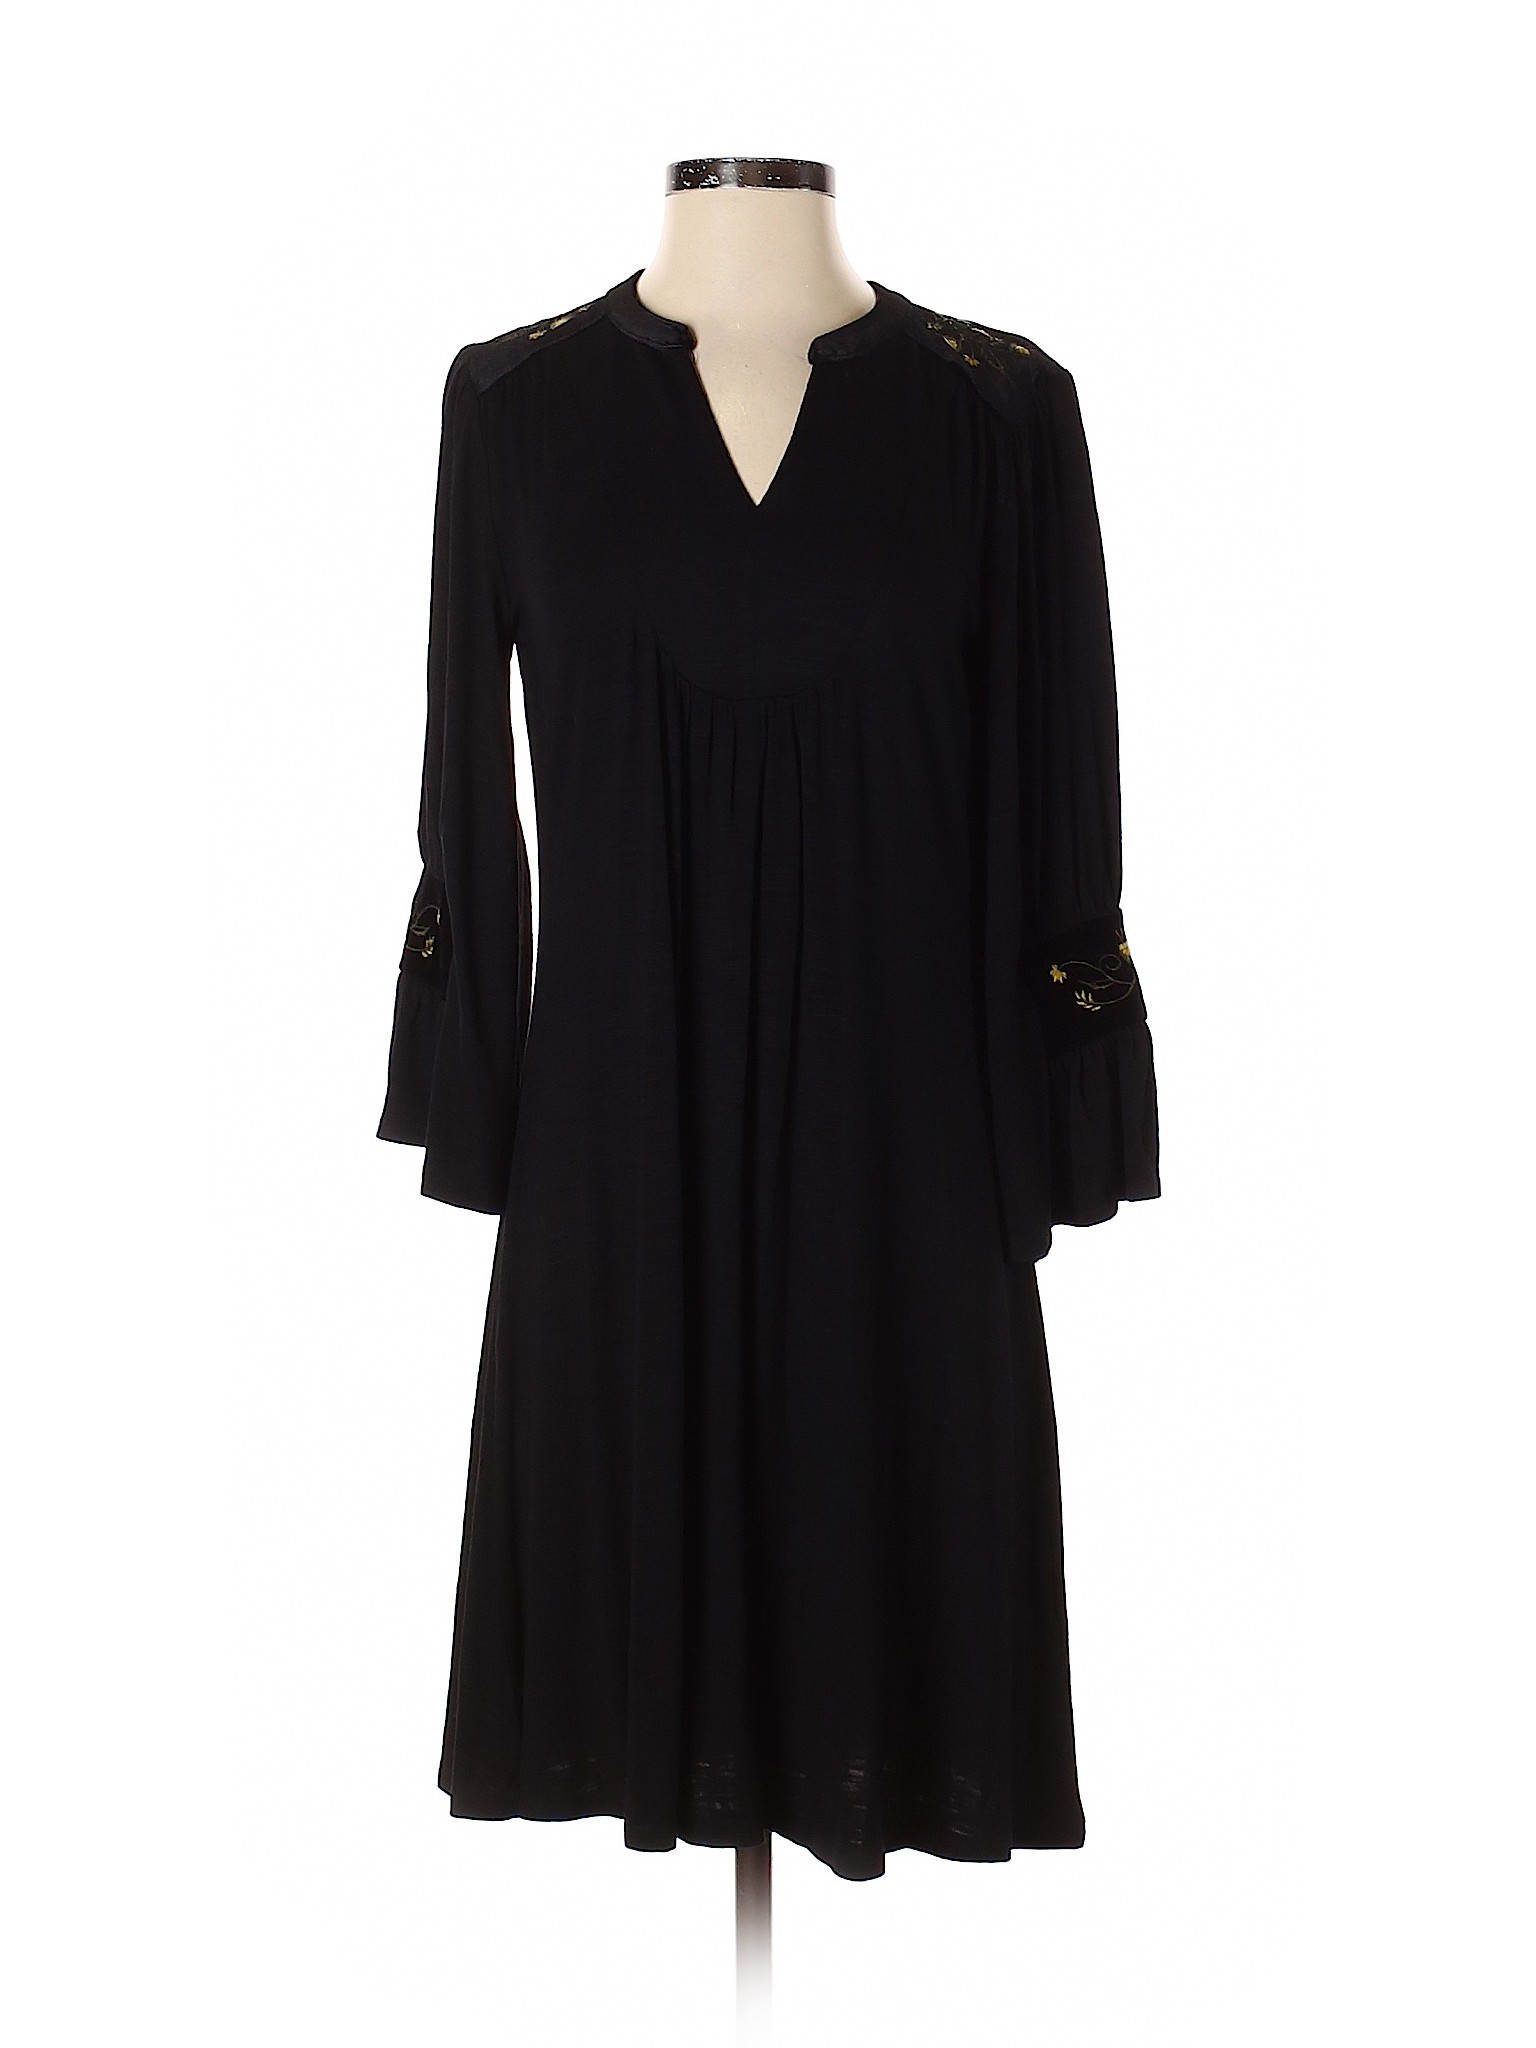 Cupio Women Black Casual Dress S | eBay